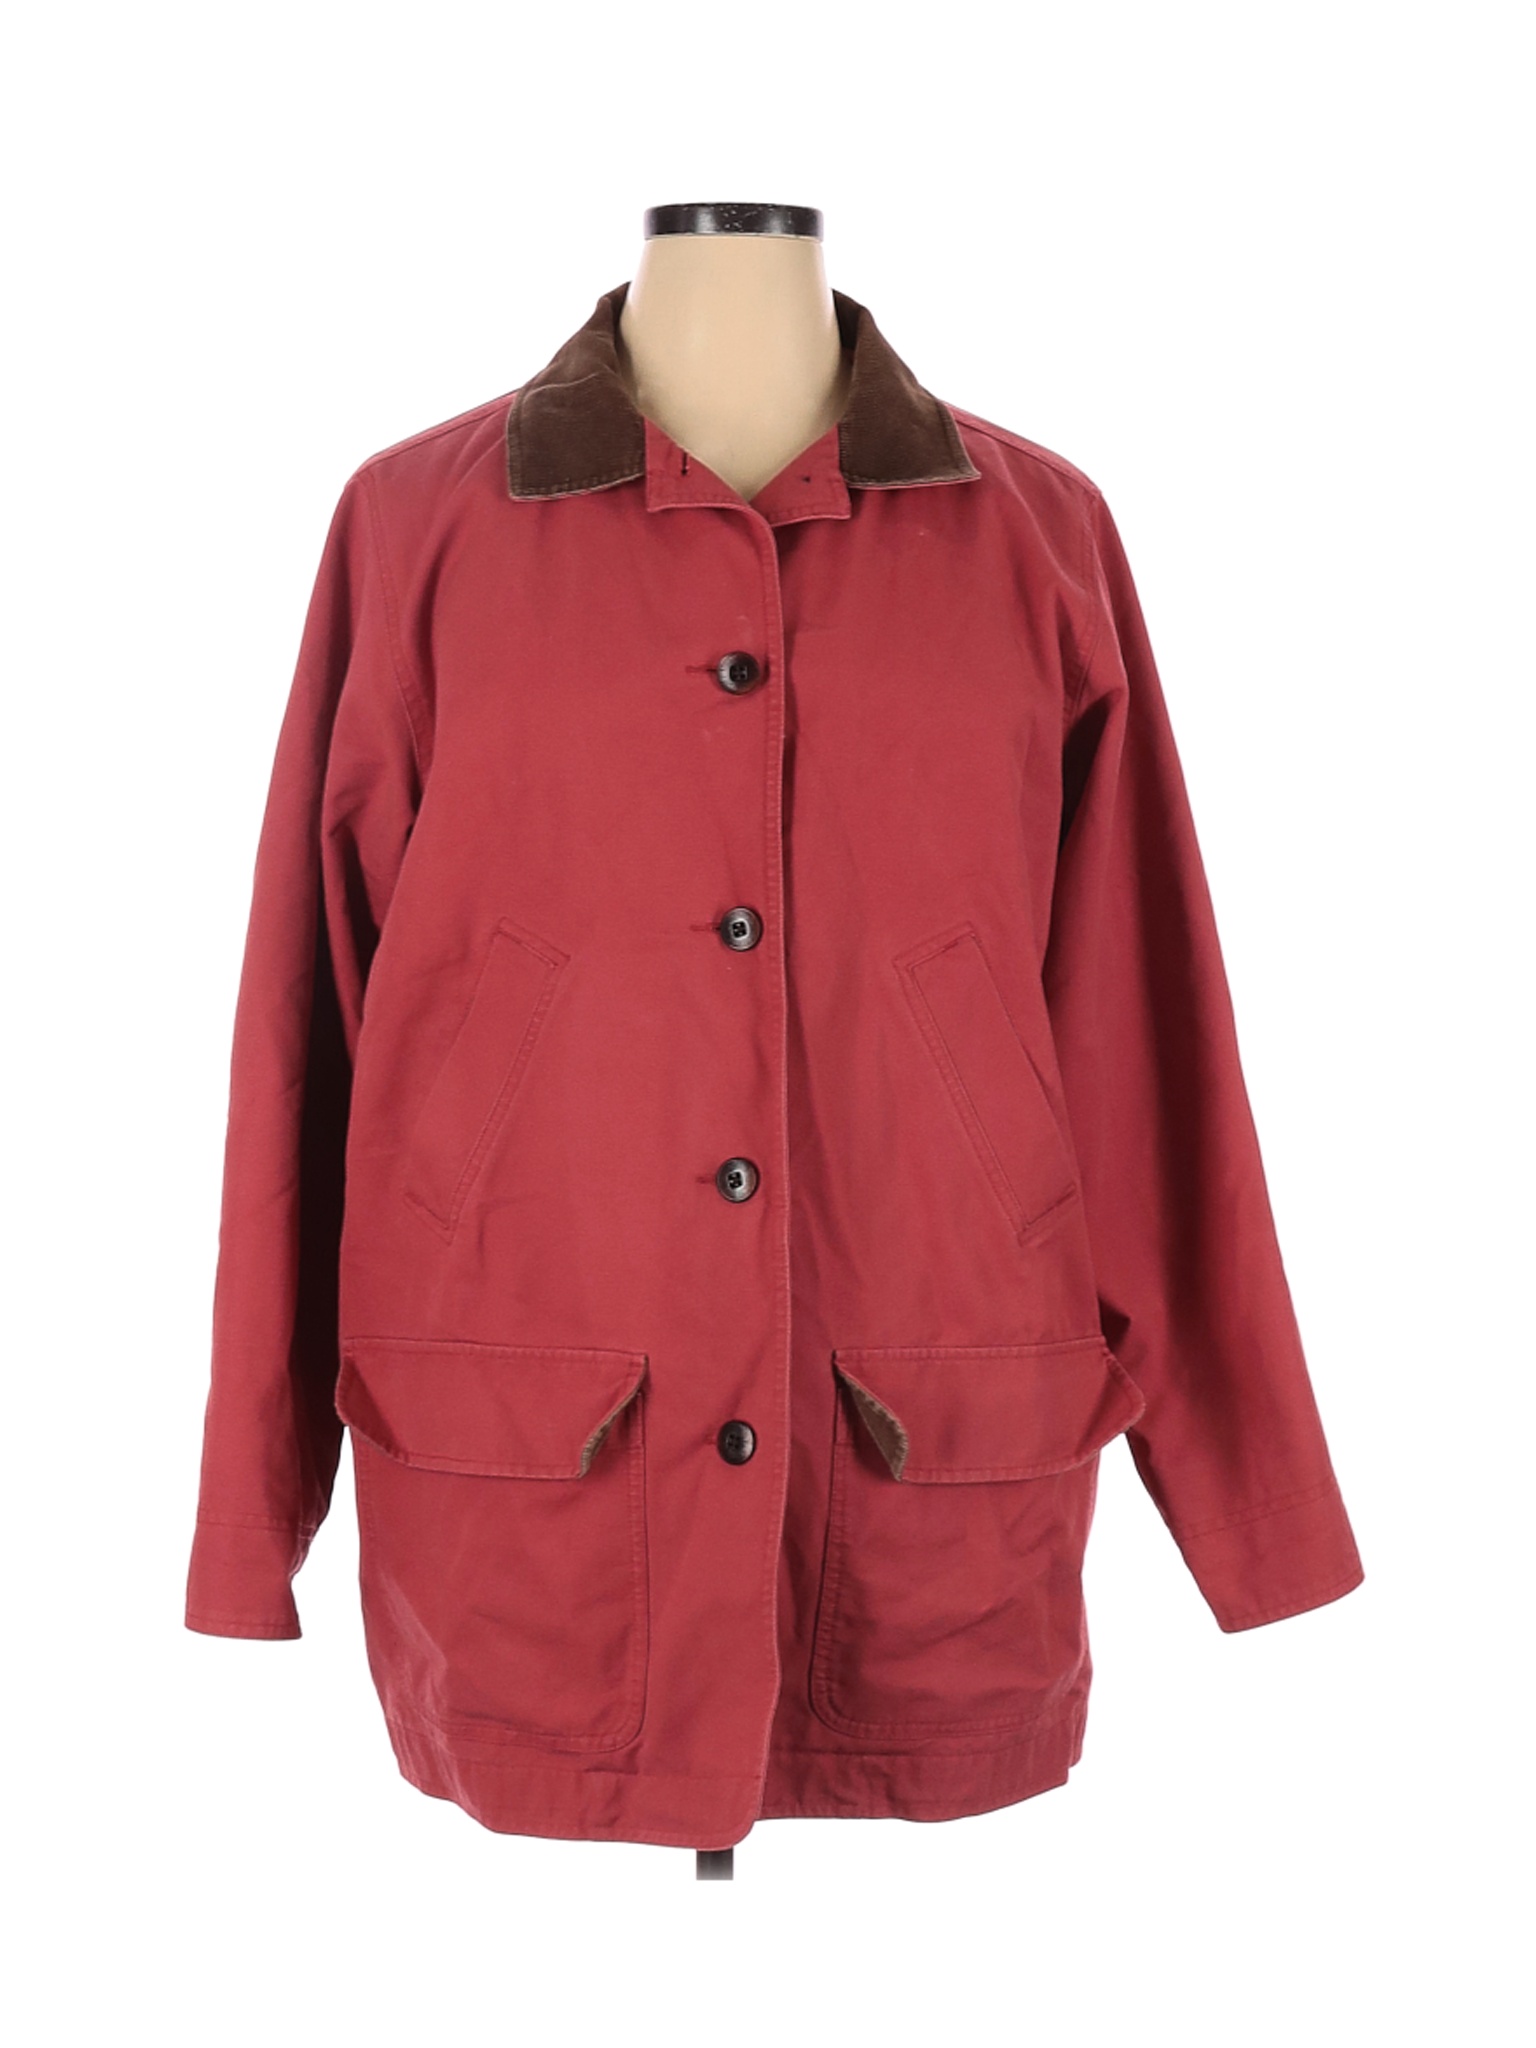 L.L.Bean Women Red Jacket 1X Plus | eBay